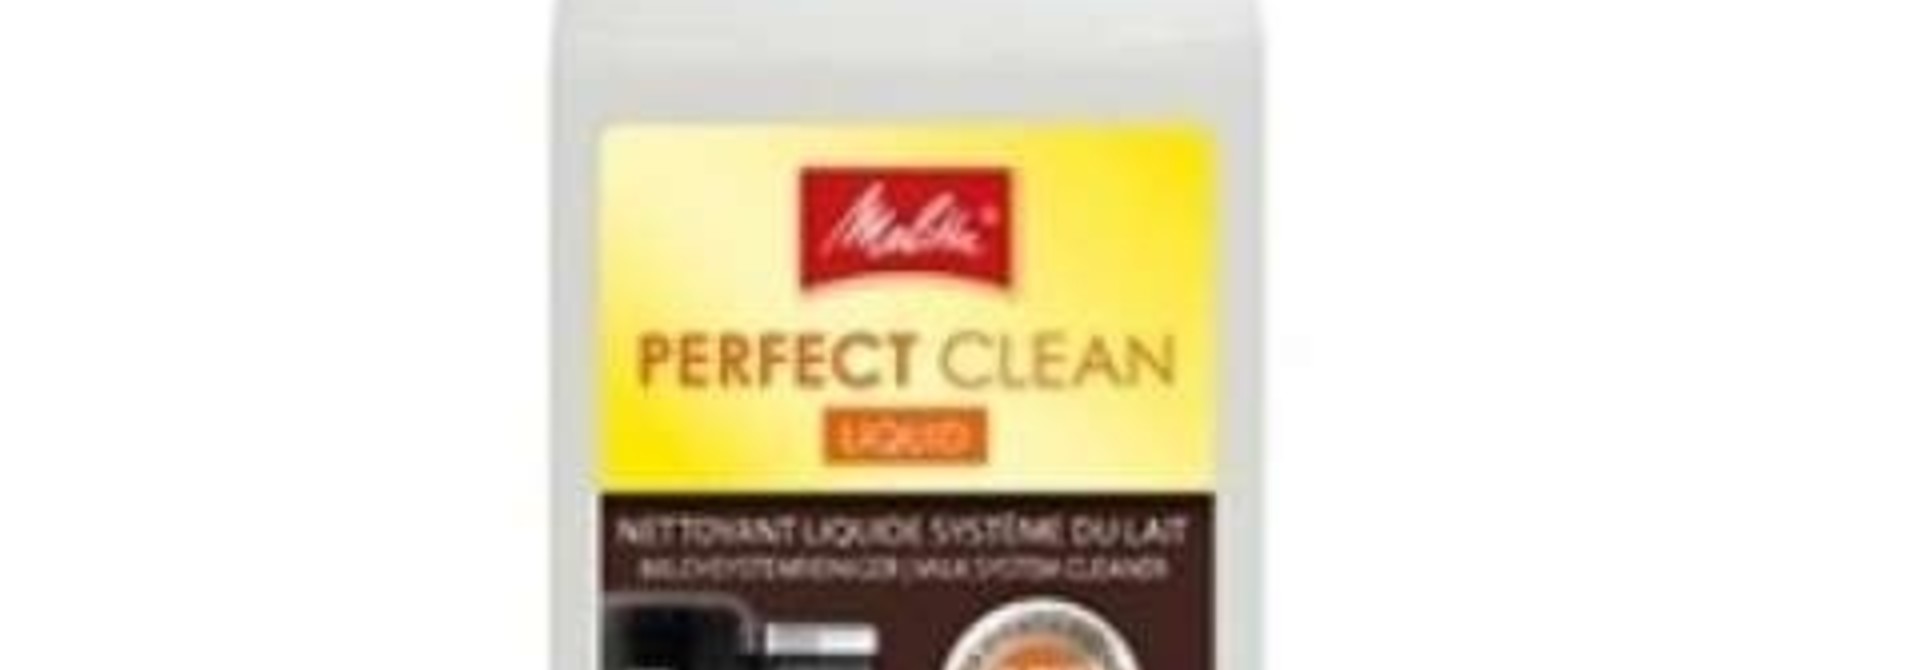 Melitta Perfect clean